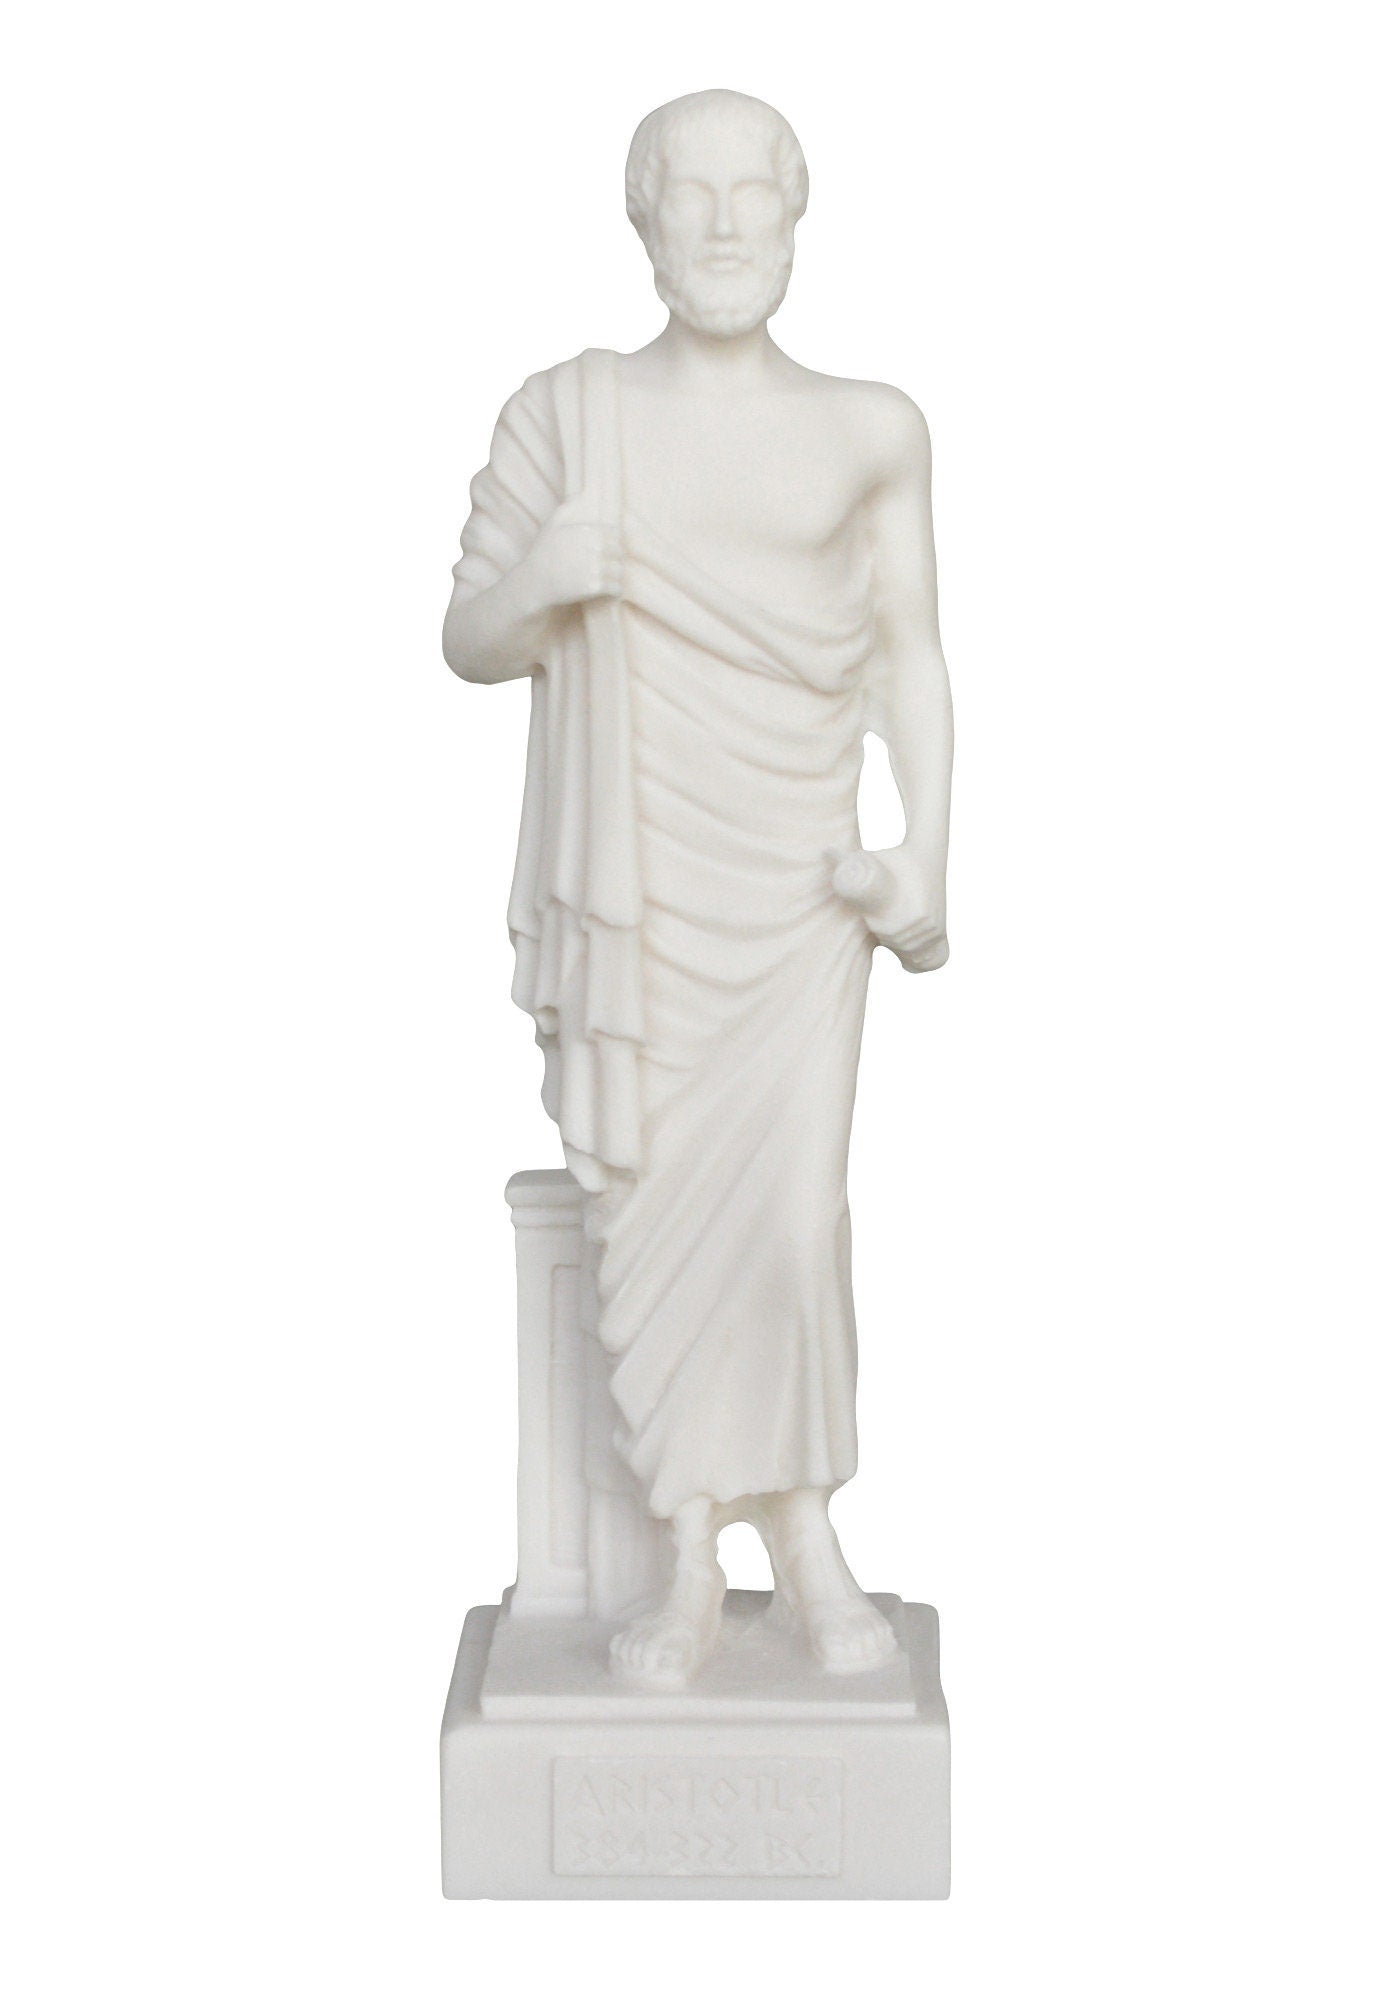 Aristotle - Ancient Greek Philosopher - Student of Plato - Teacher of Alexander the Great - Alabaster Statue